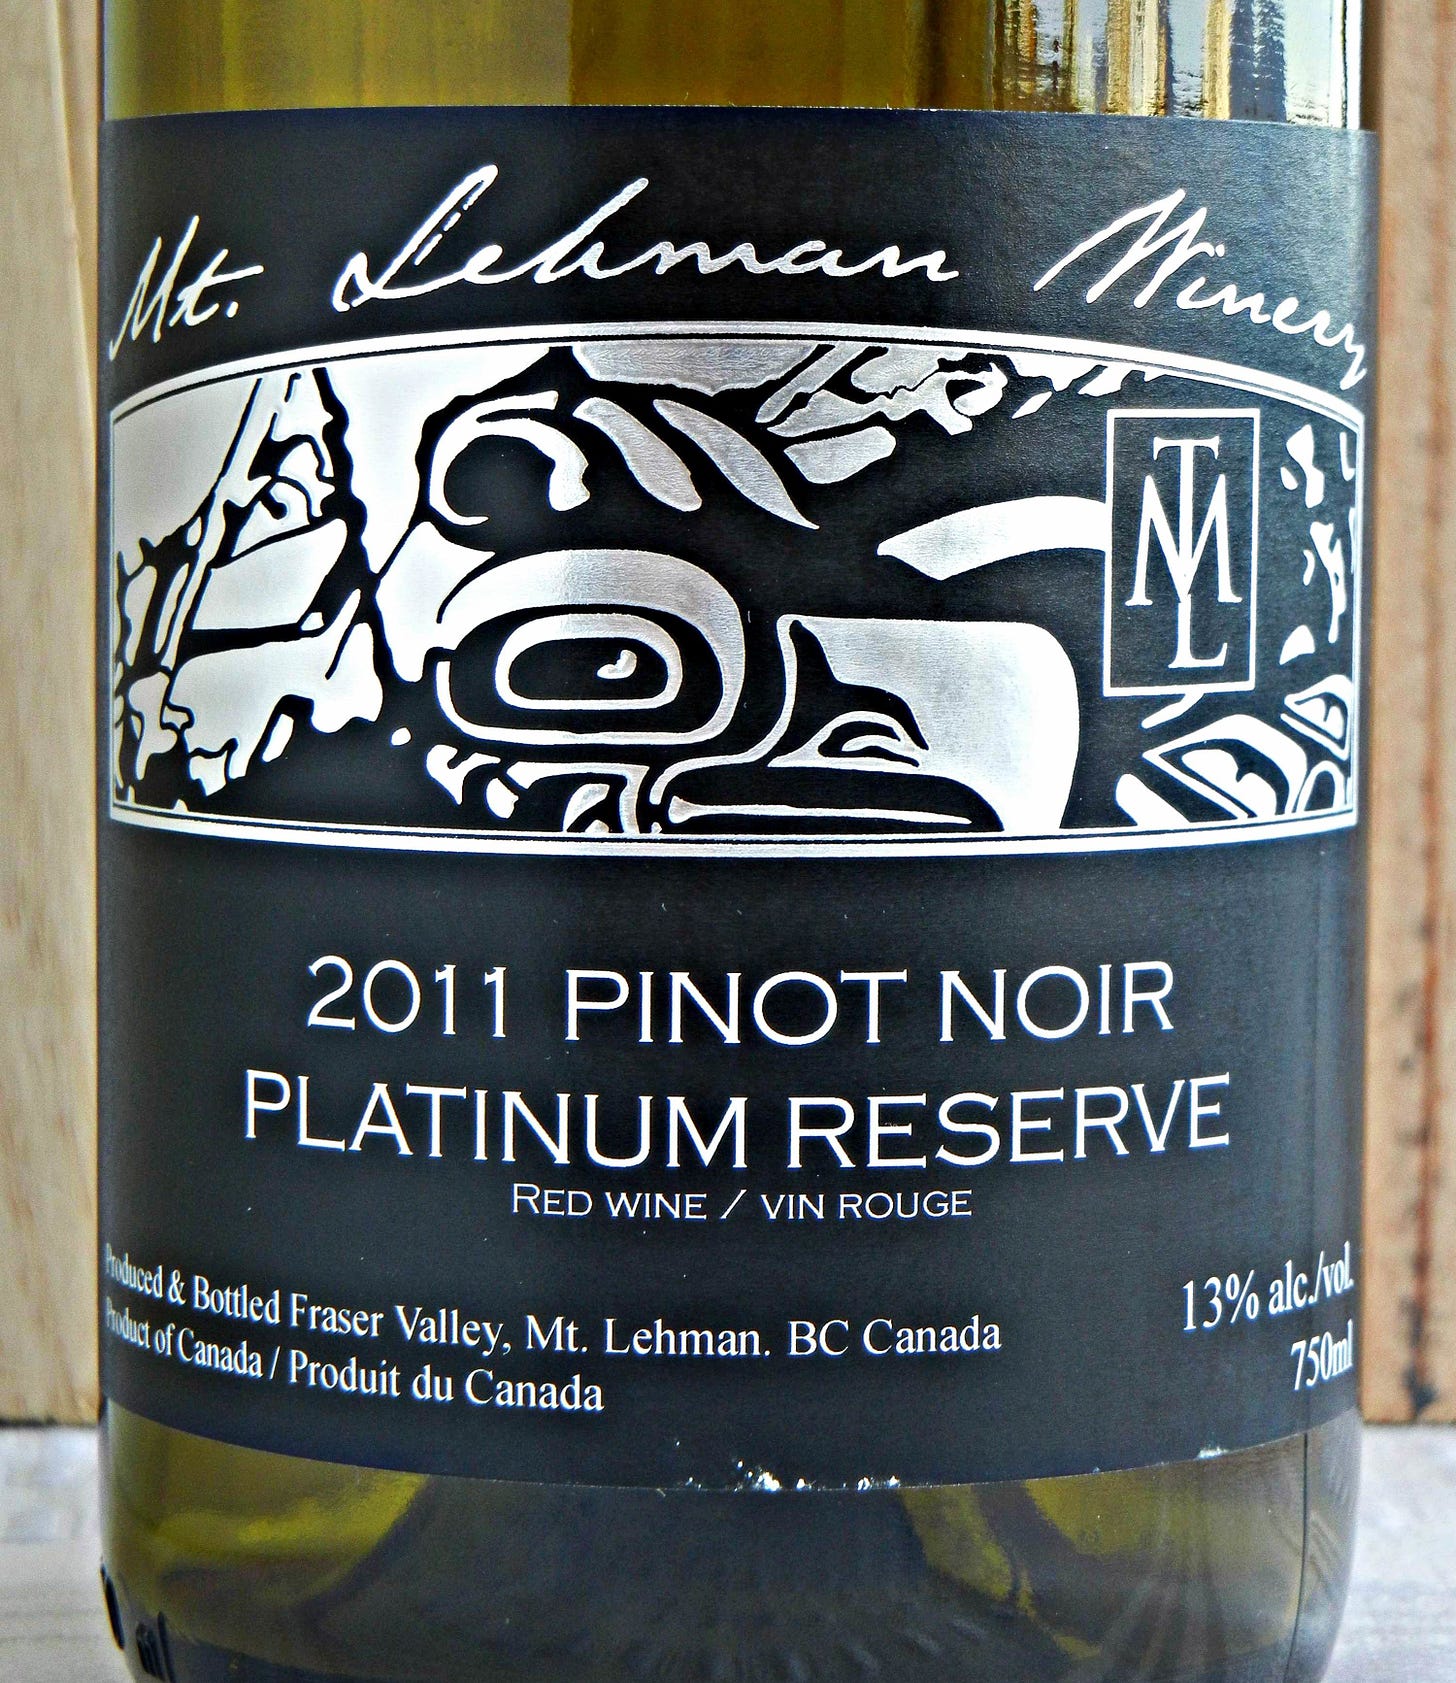 Mt. Lehman Platinum Reserve Pinot Noir 2011 Label - BC Pinot Noir Tasting Review 11